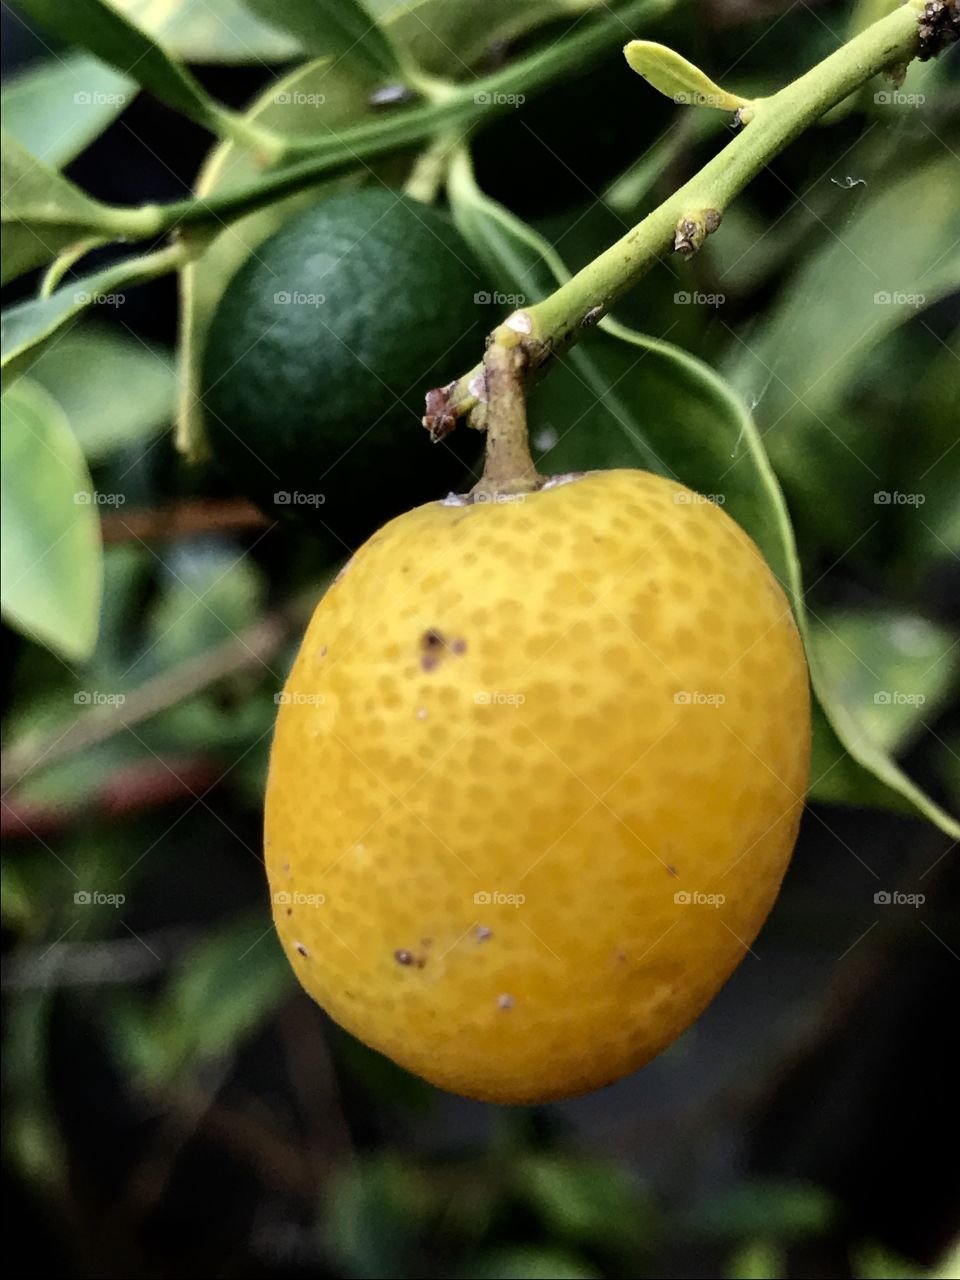 Close-up of a yellow lemon